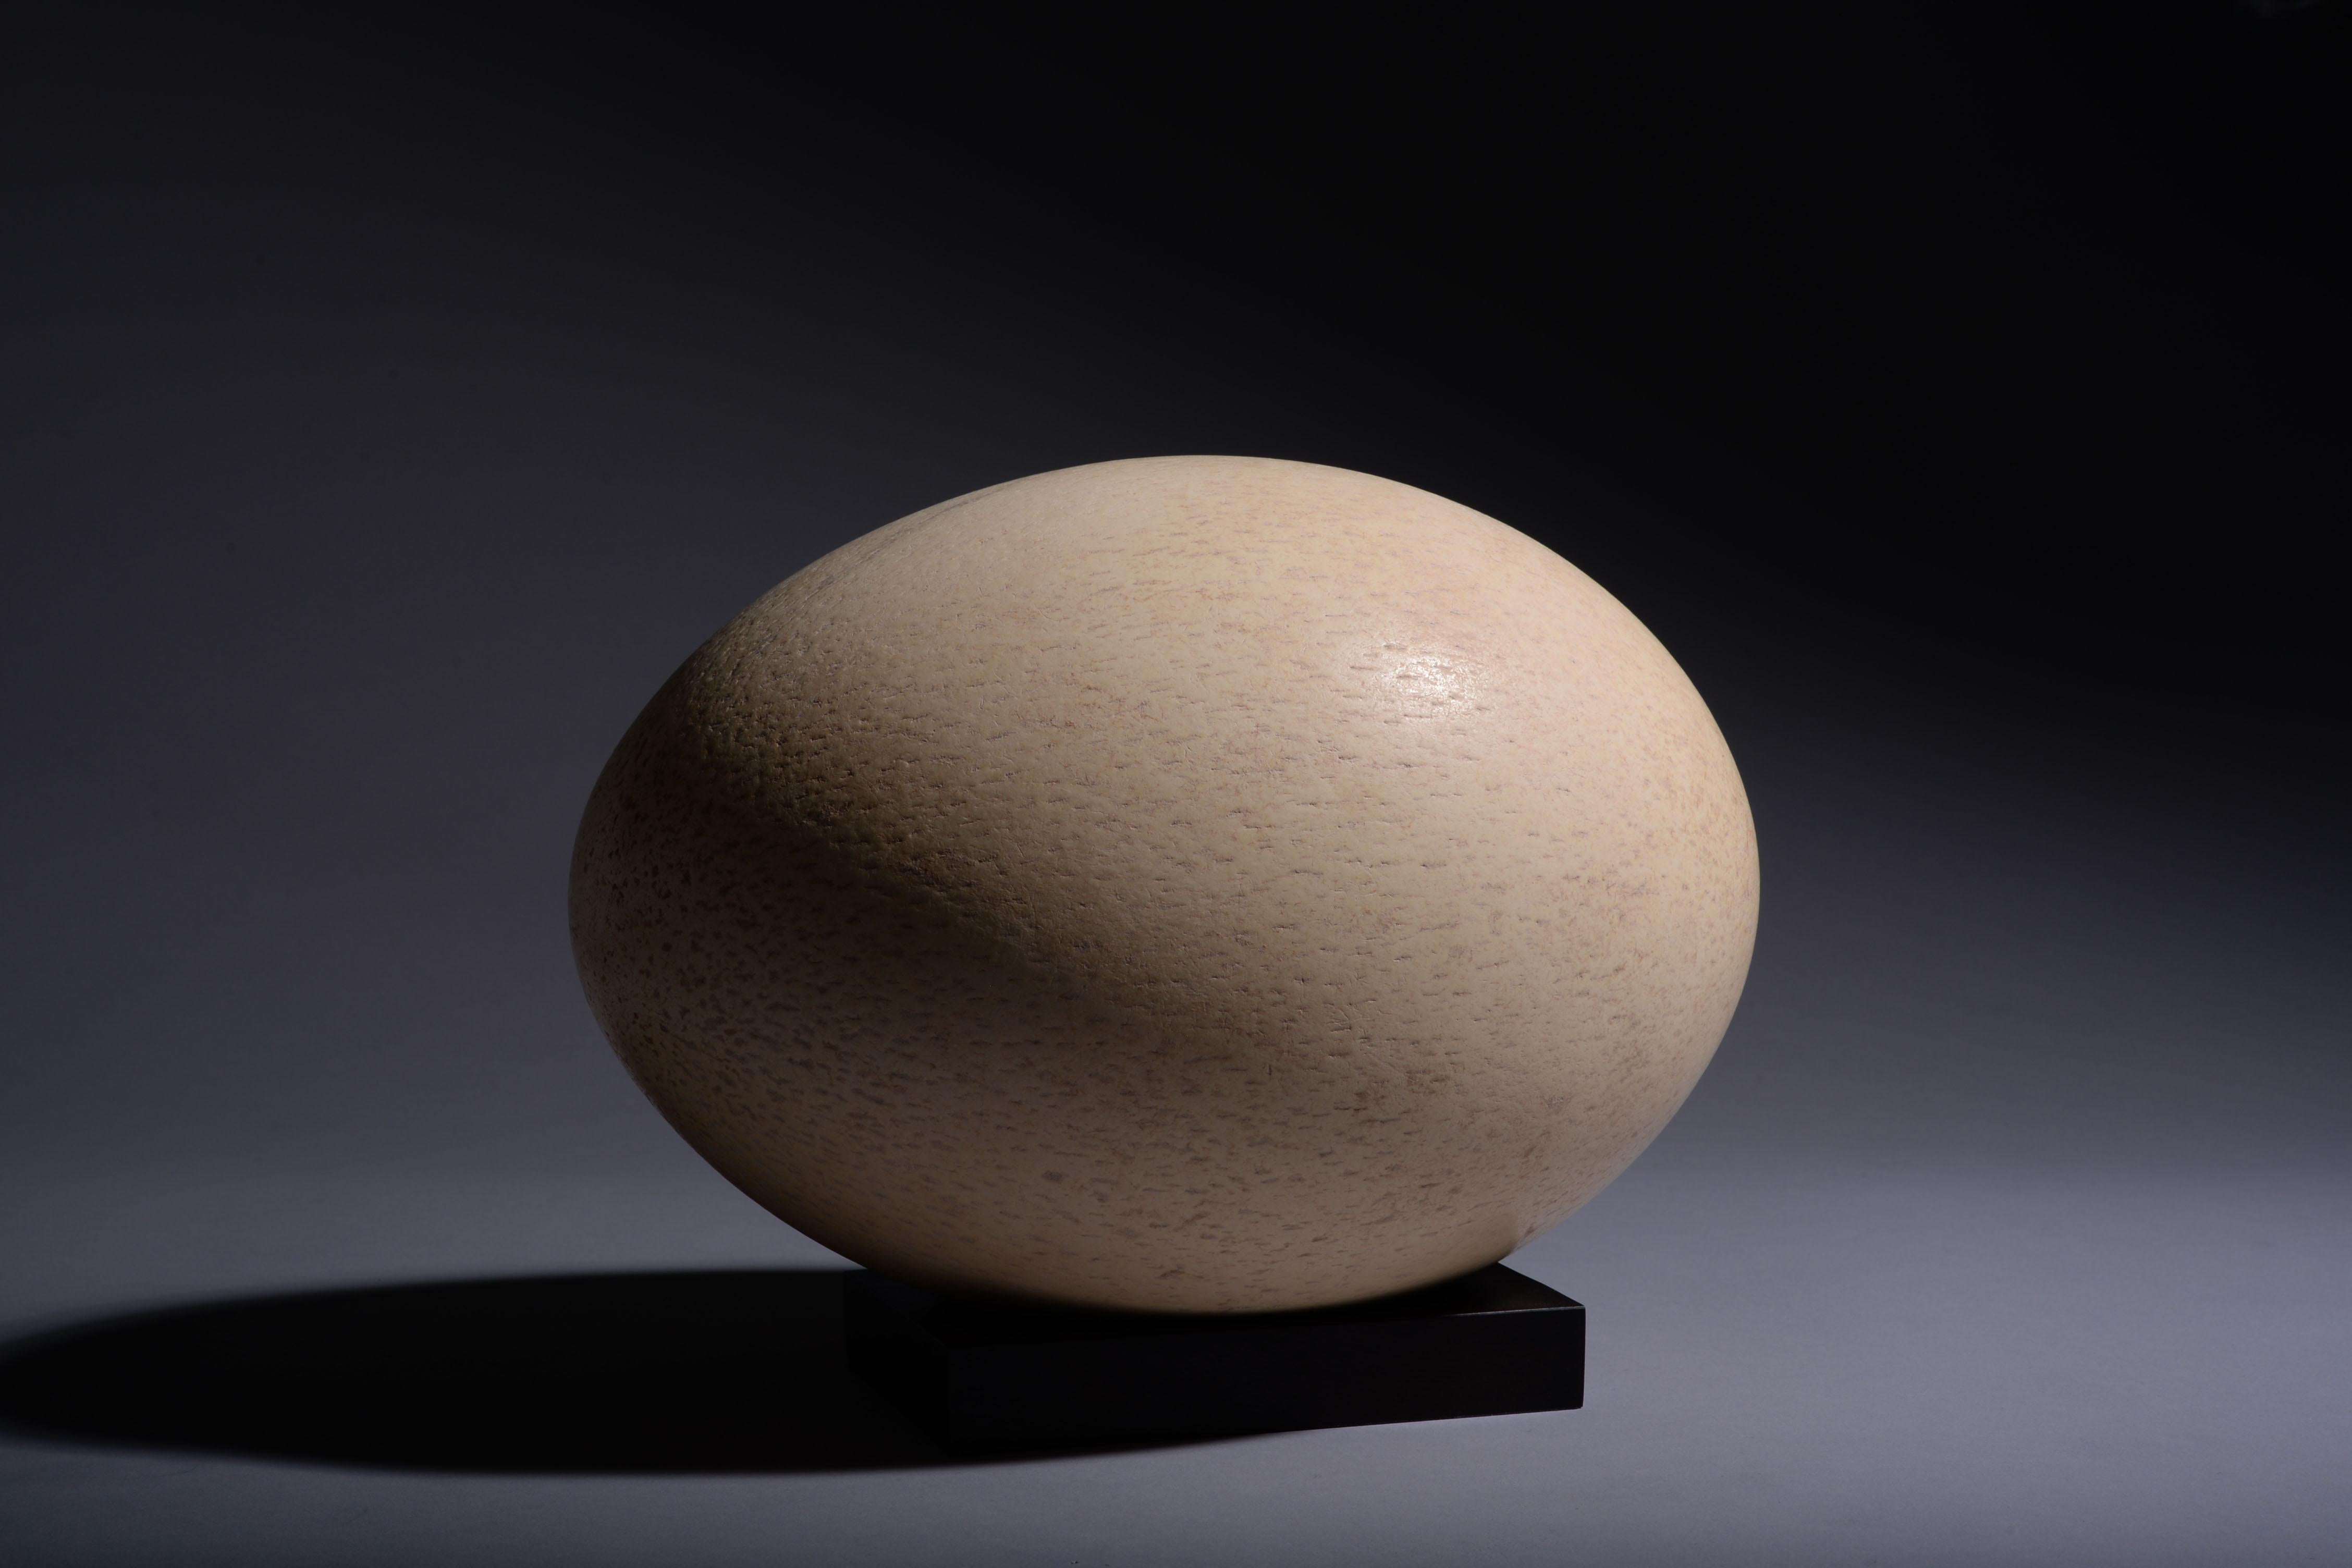 aepyornis egg for sale